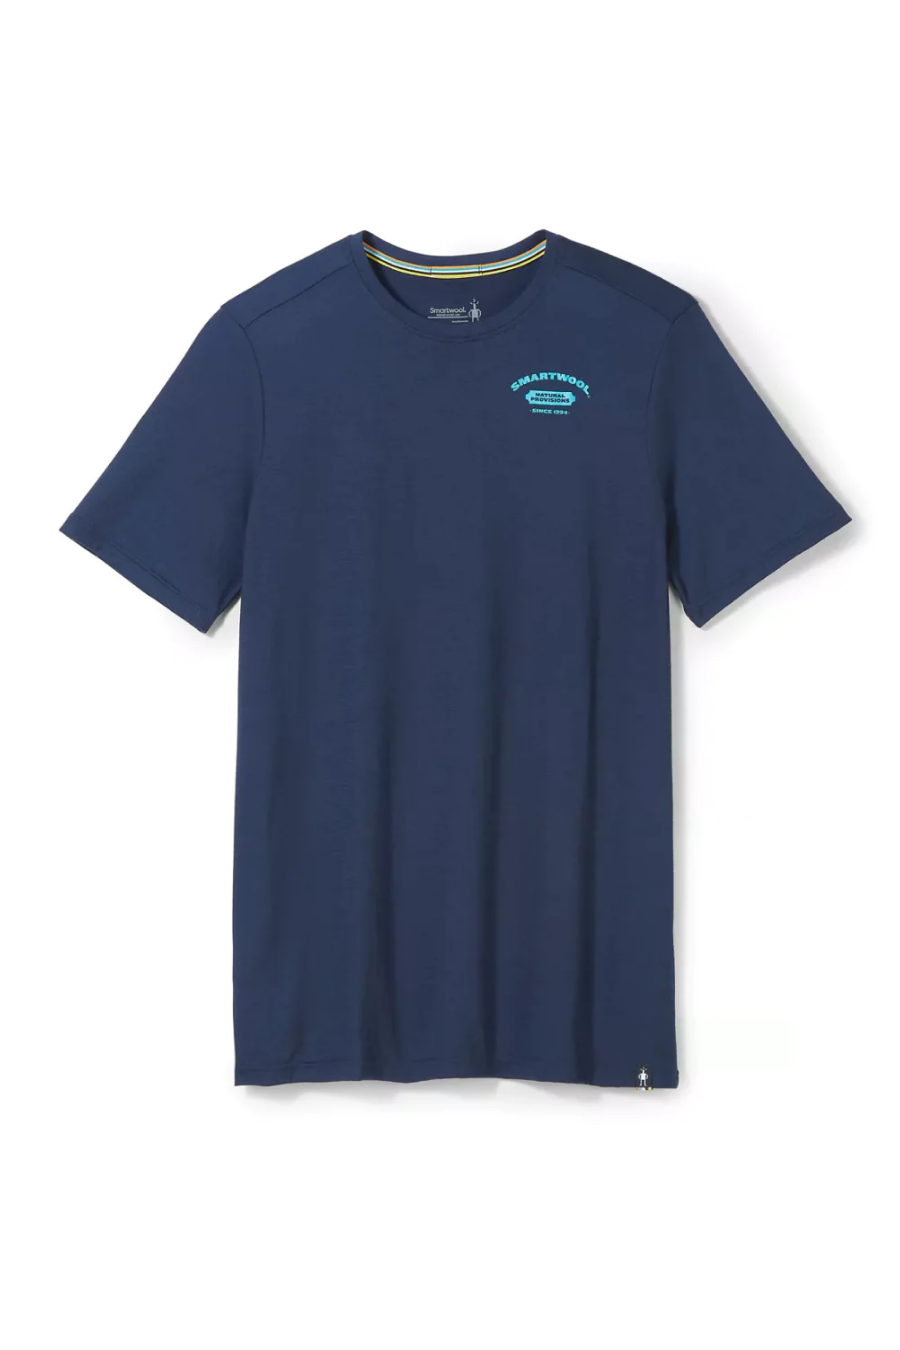 SmartWool Men's Natural Provisions Printed T-Shirt